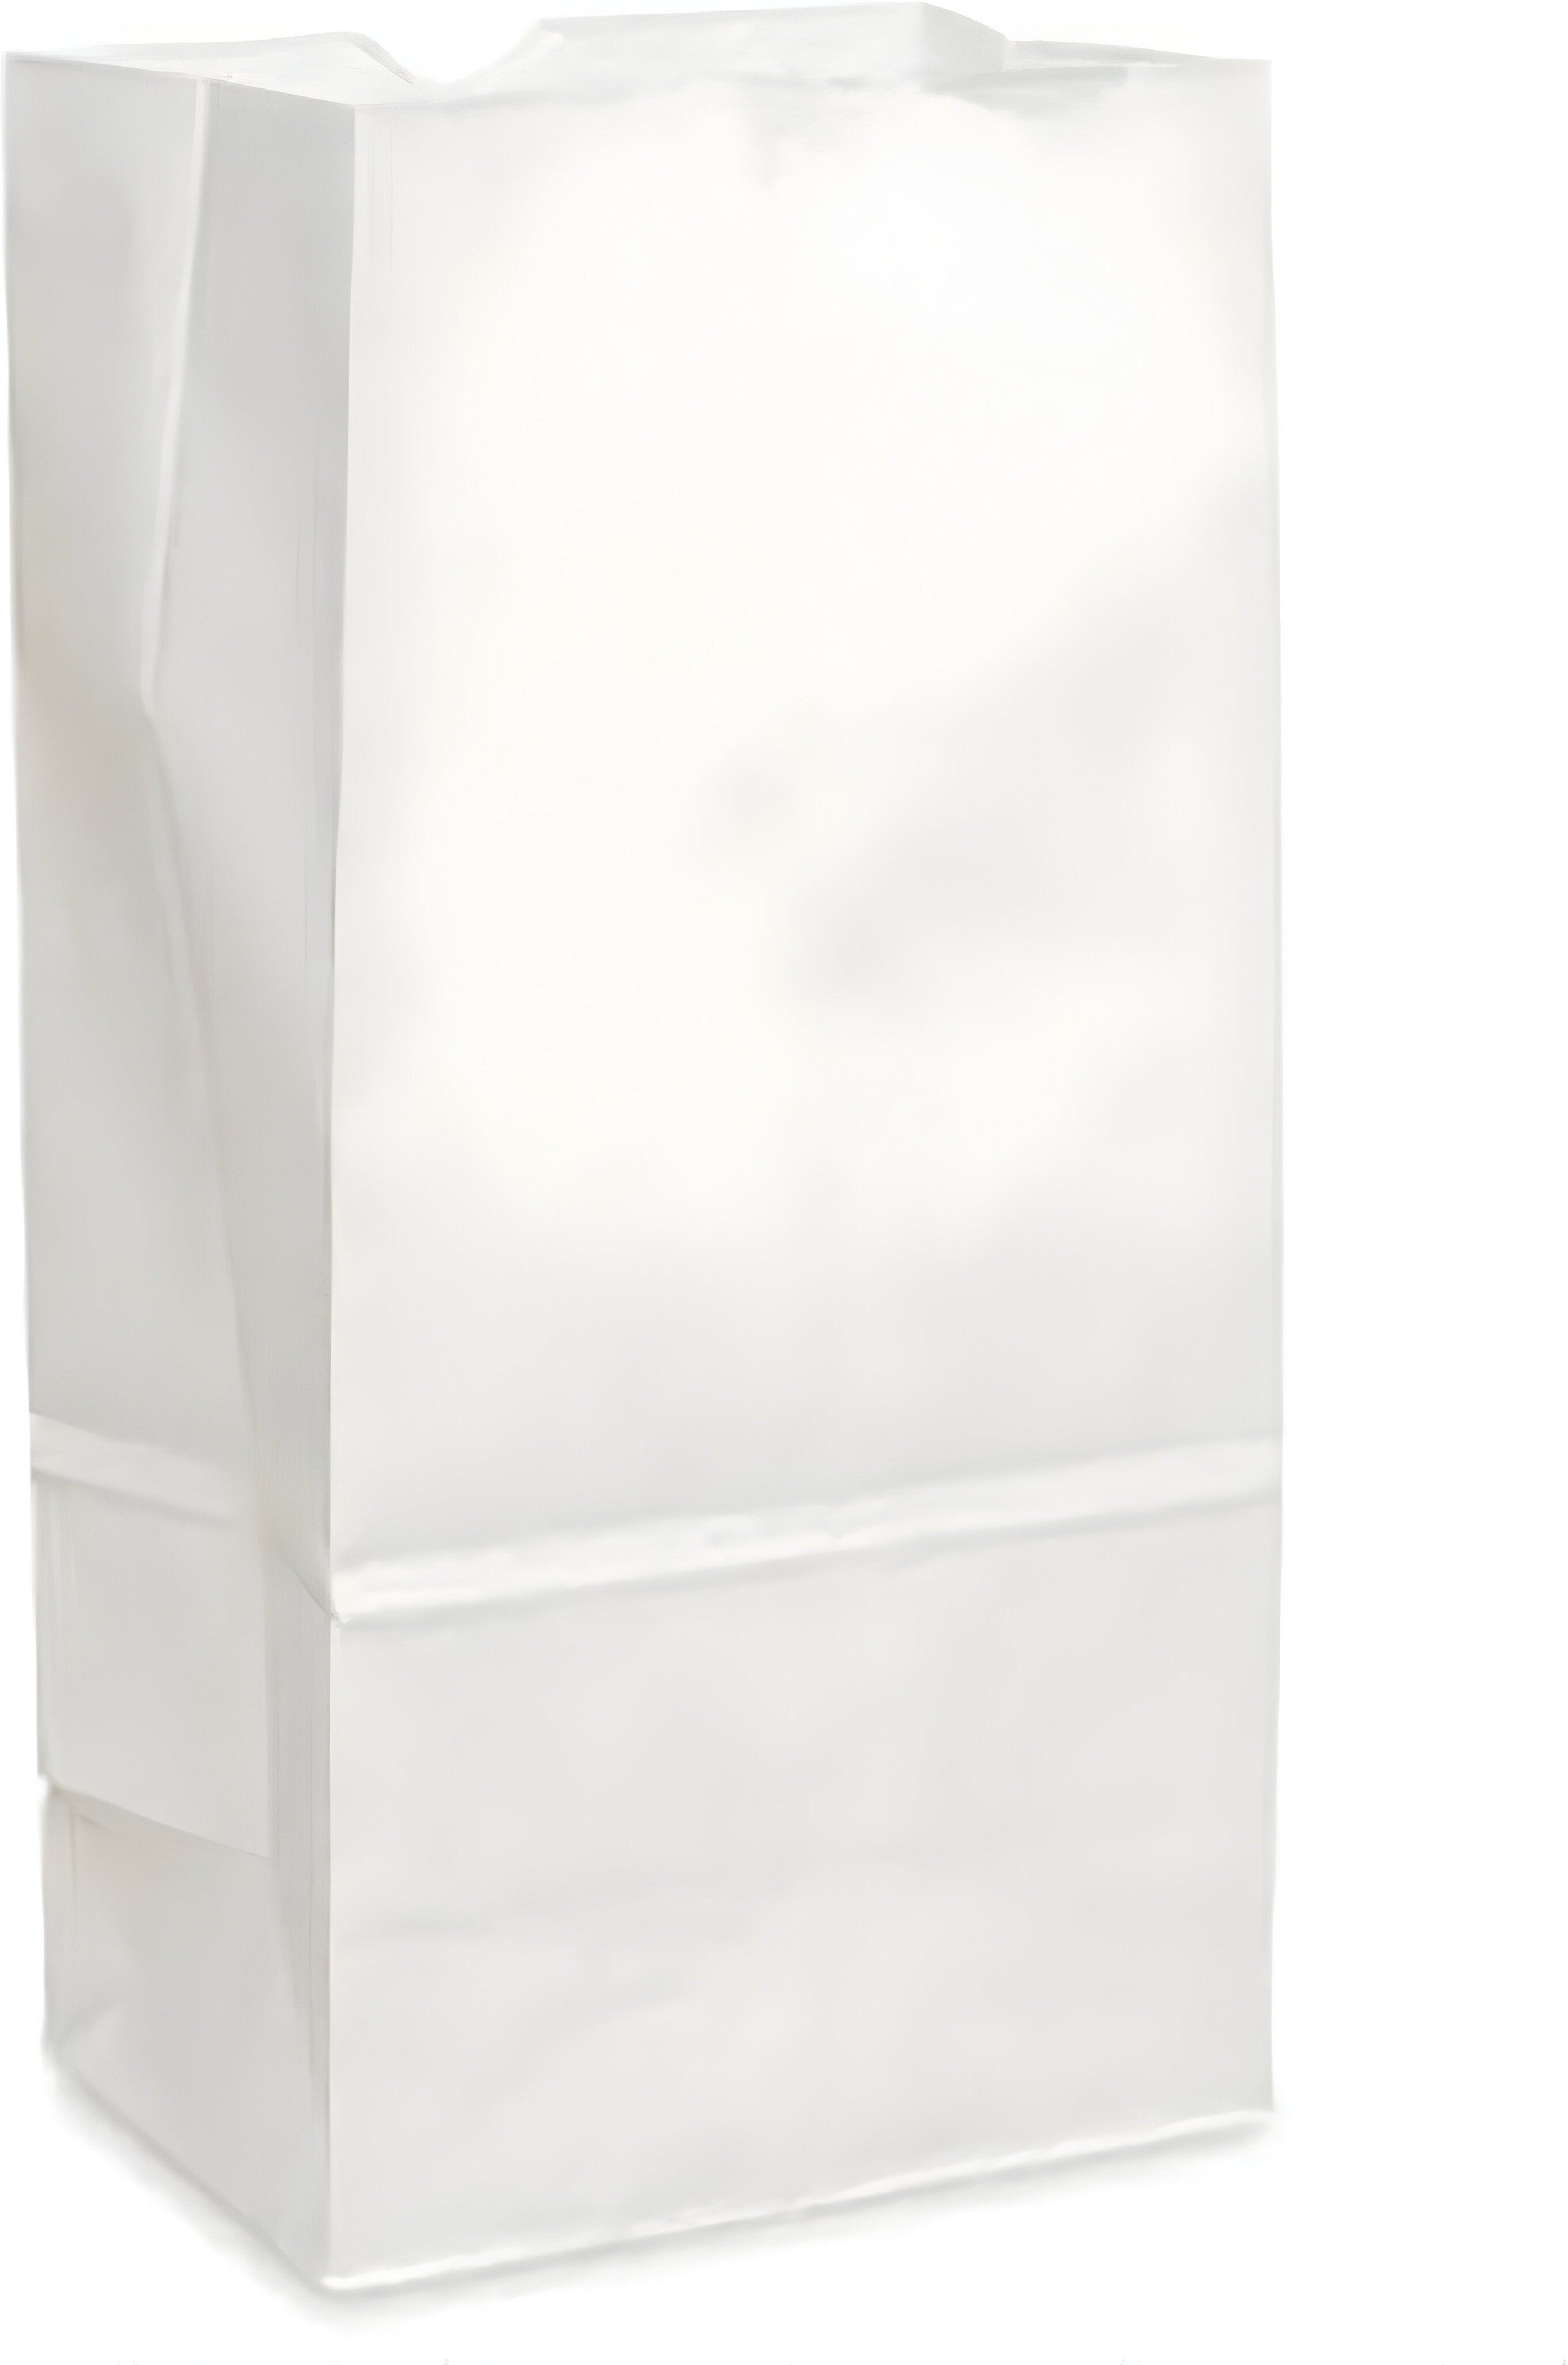 Atlas Paper Bag - 5 lb White Paper Bags, 500/Bn - 4050005